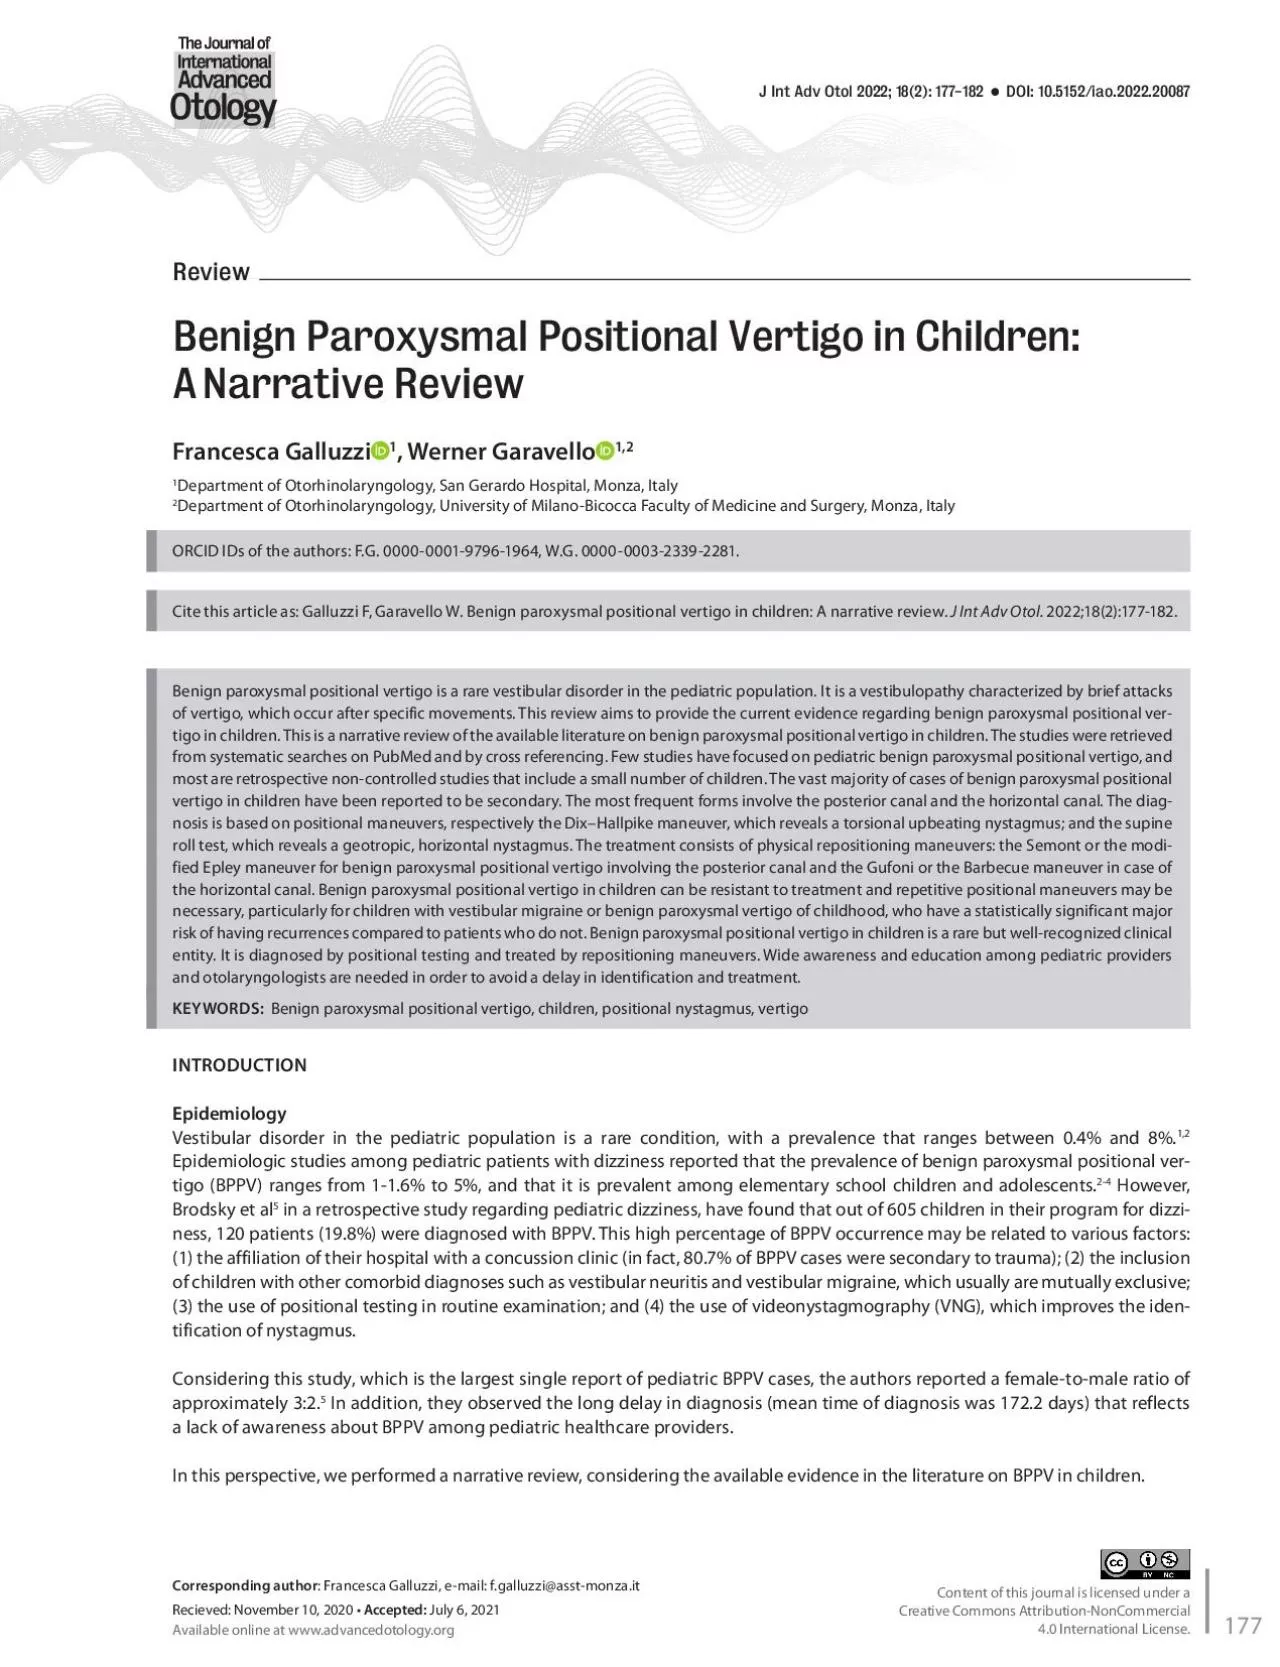 Benign Paroxysmal Positional Vertigo in Children A31Narrative Revi